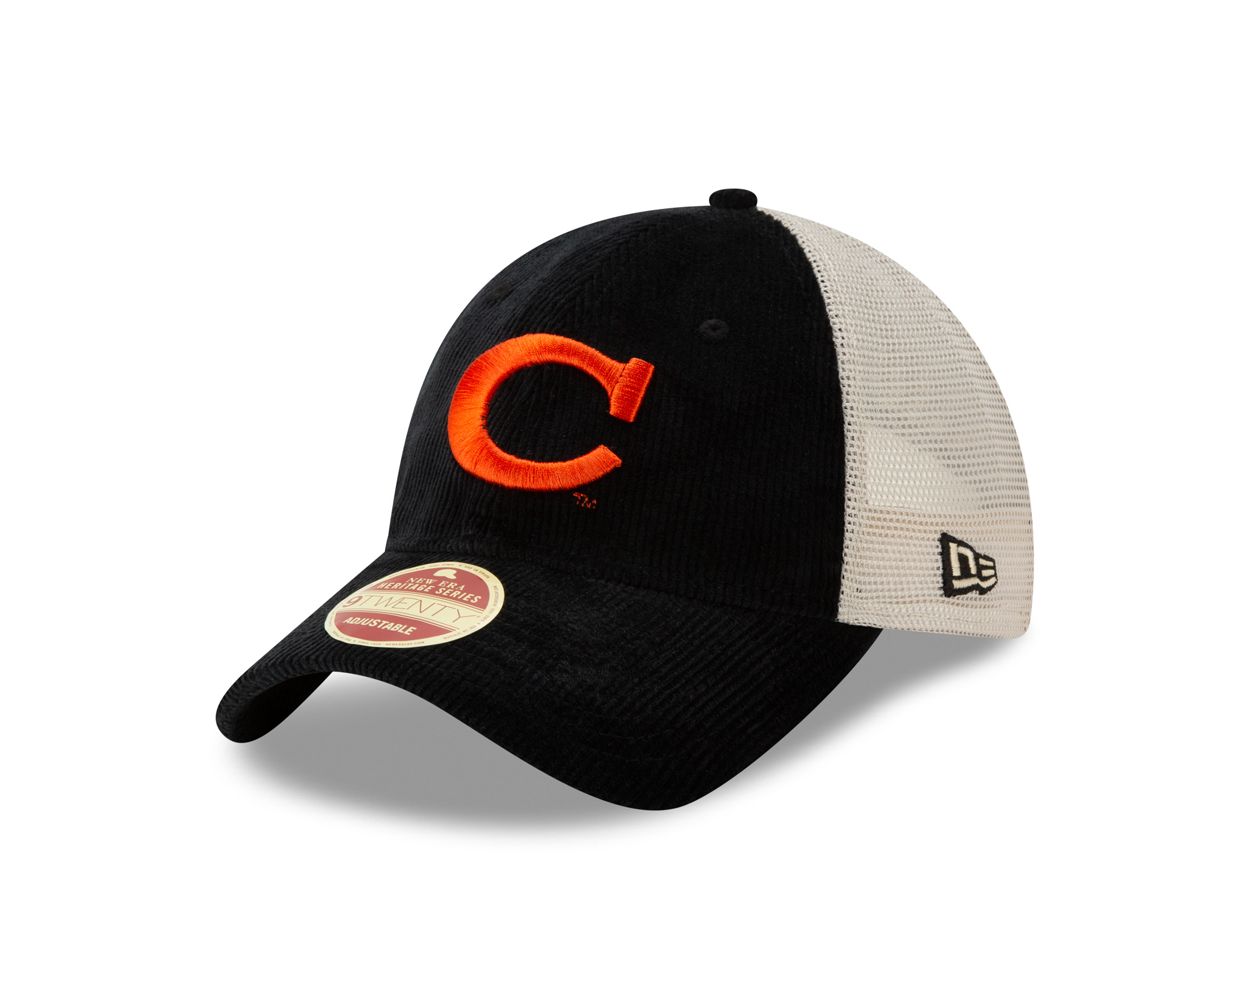 New Corduroy Clemson Heritage Hat Era